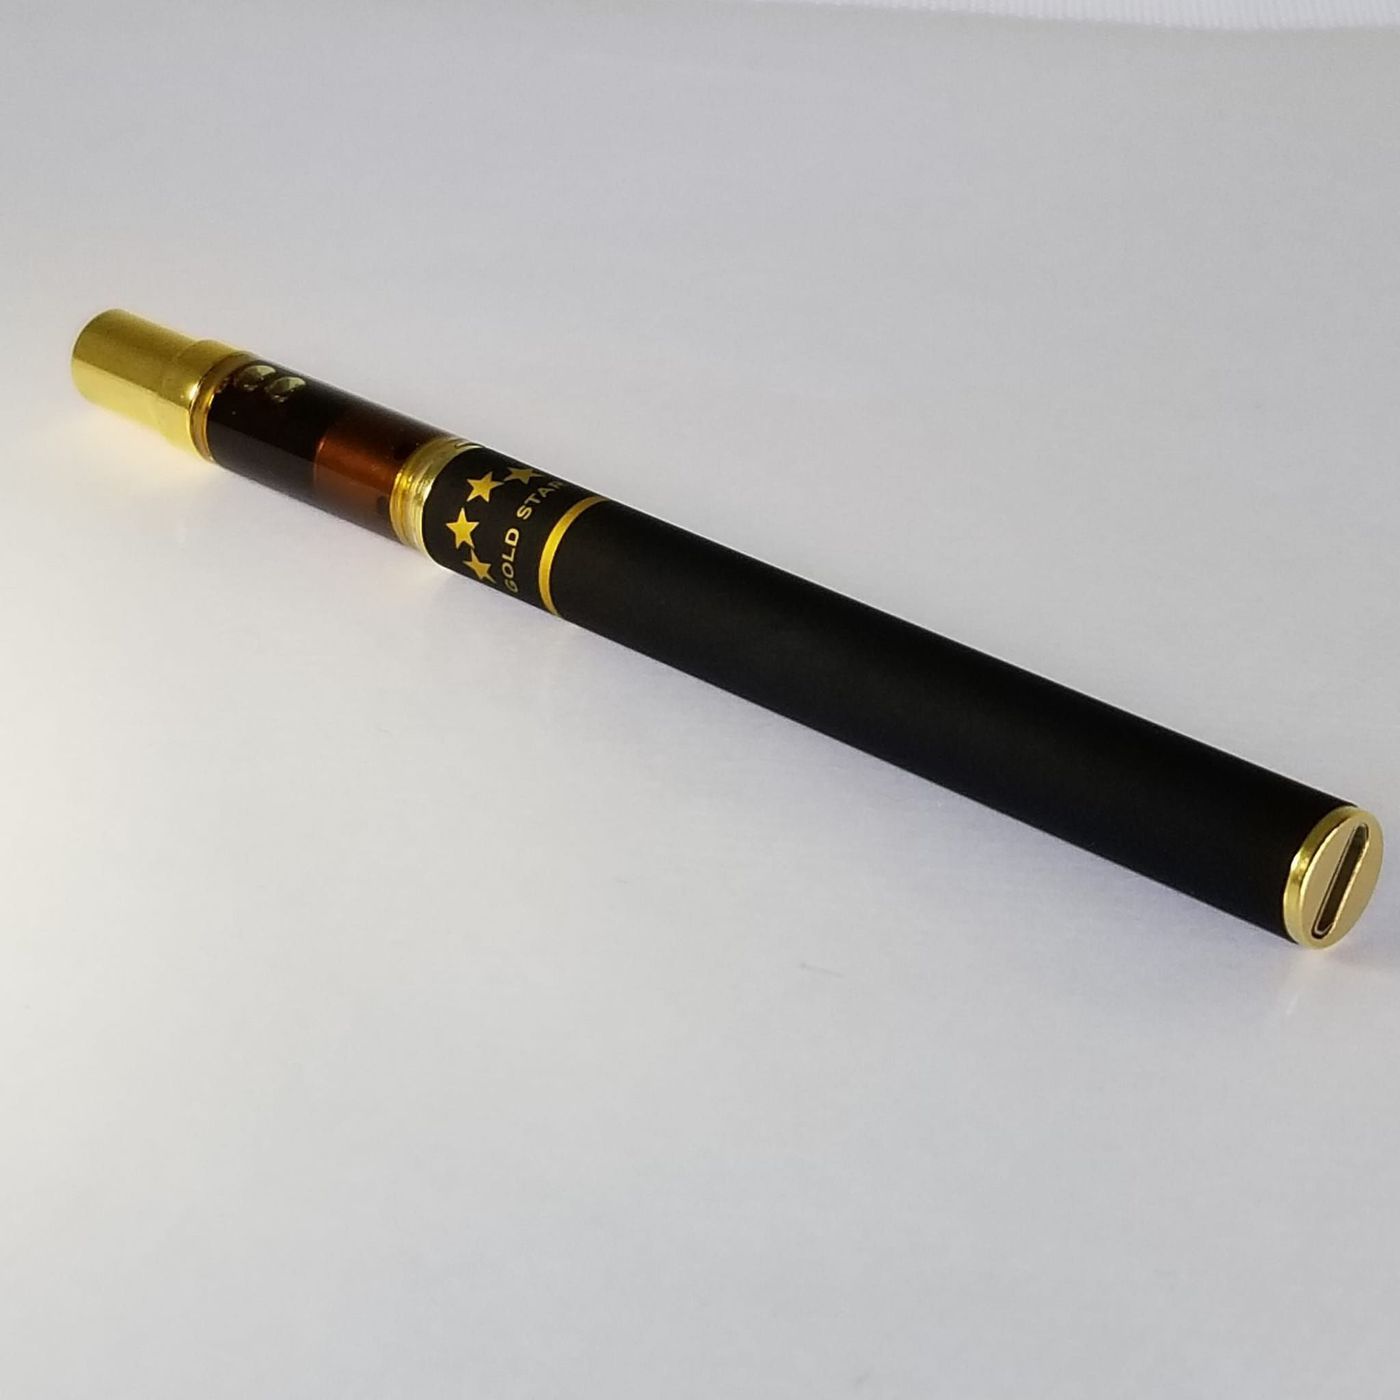 Gold Star Rosin - Disposable Vape Pen - Bubba Gelato 0.35g